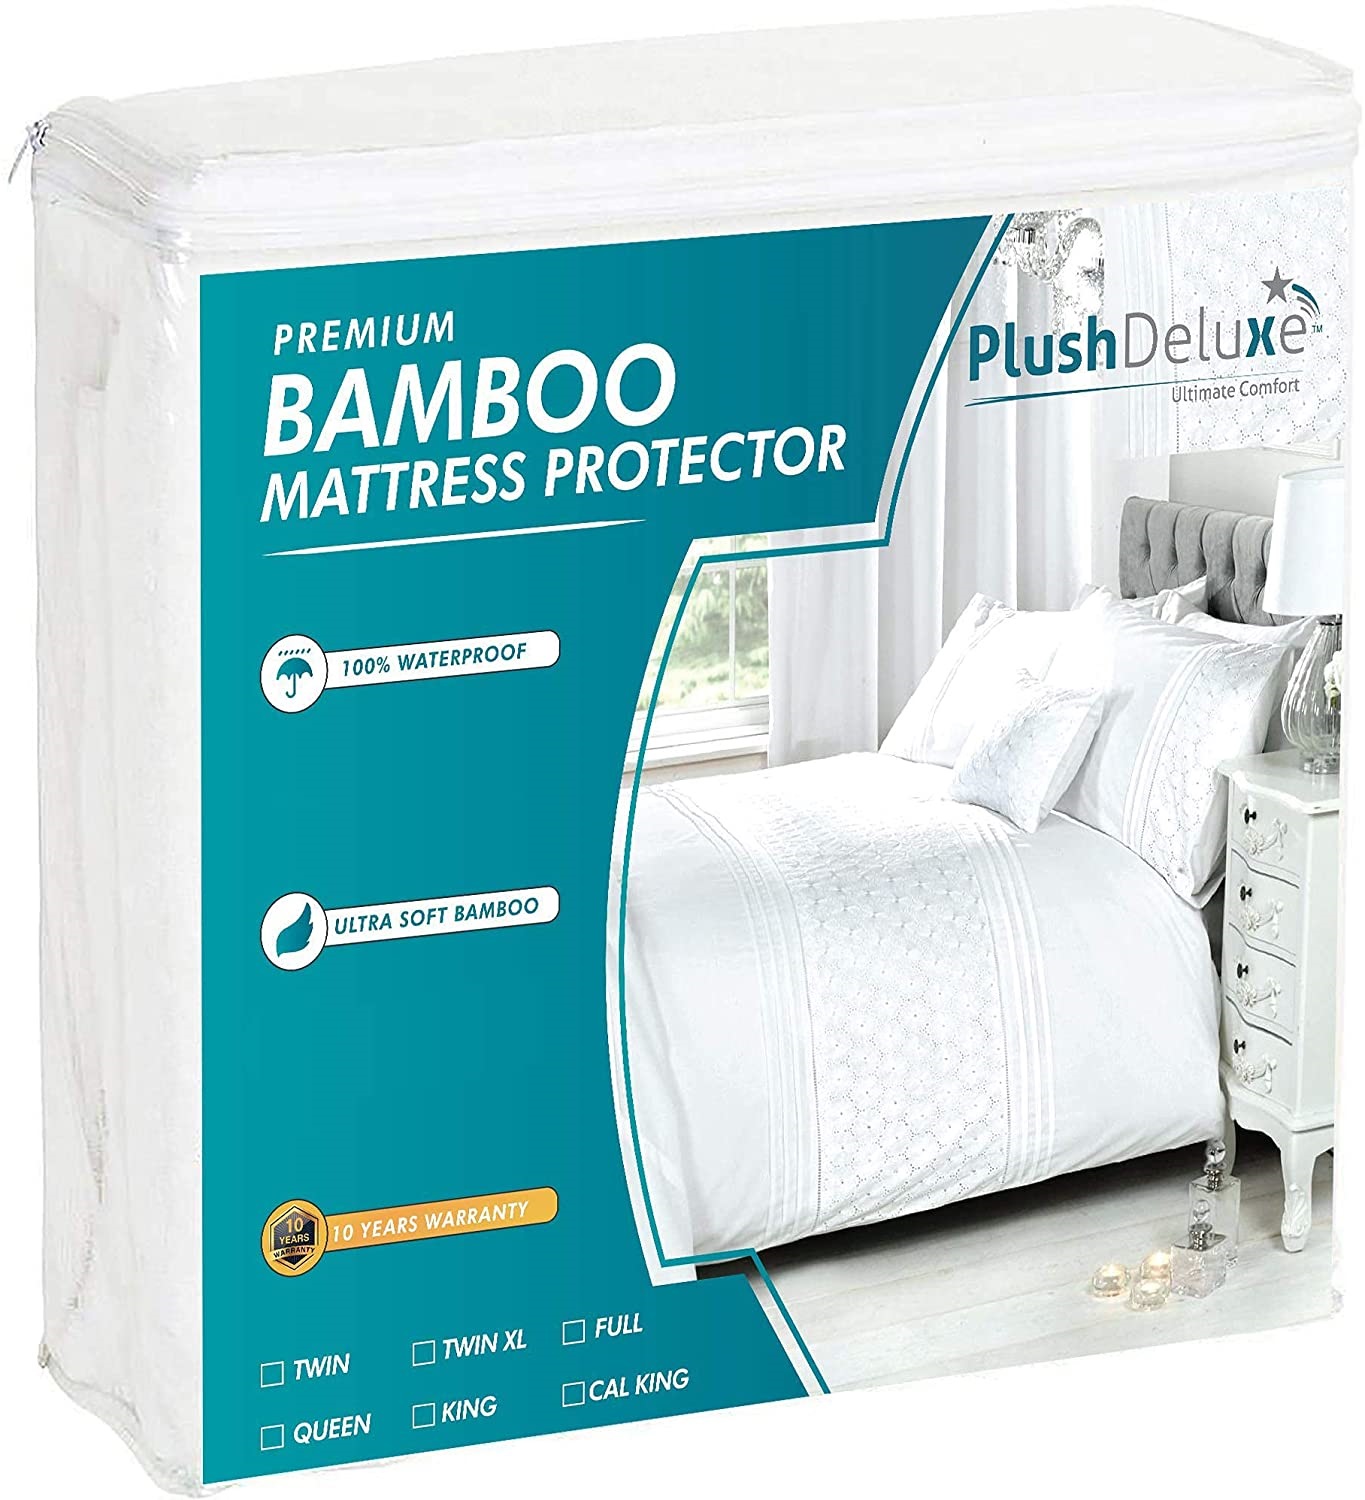 PlushDeluxe Premium Bamboo Mattress Protector